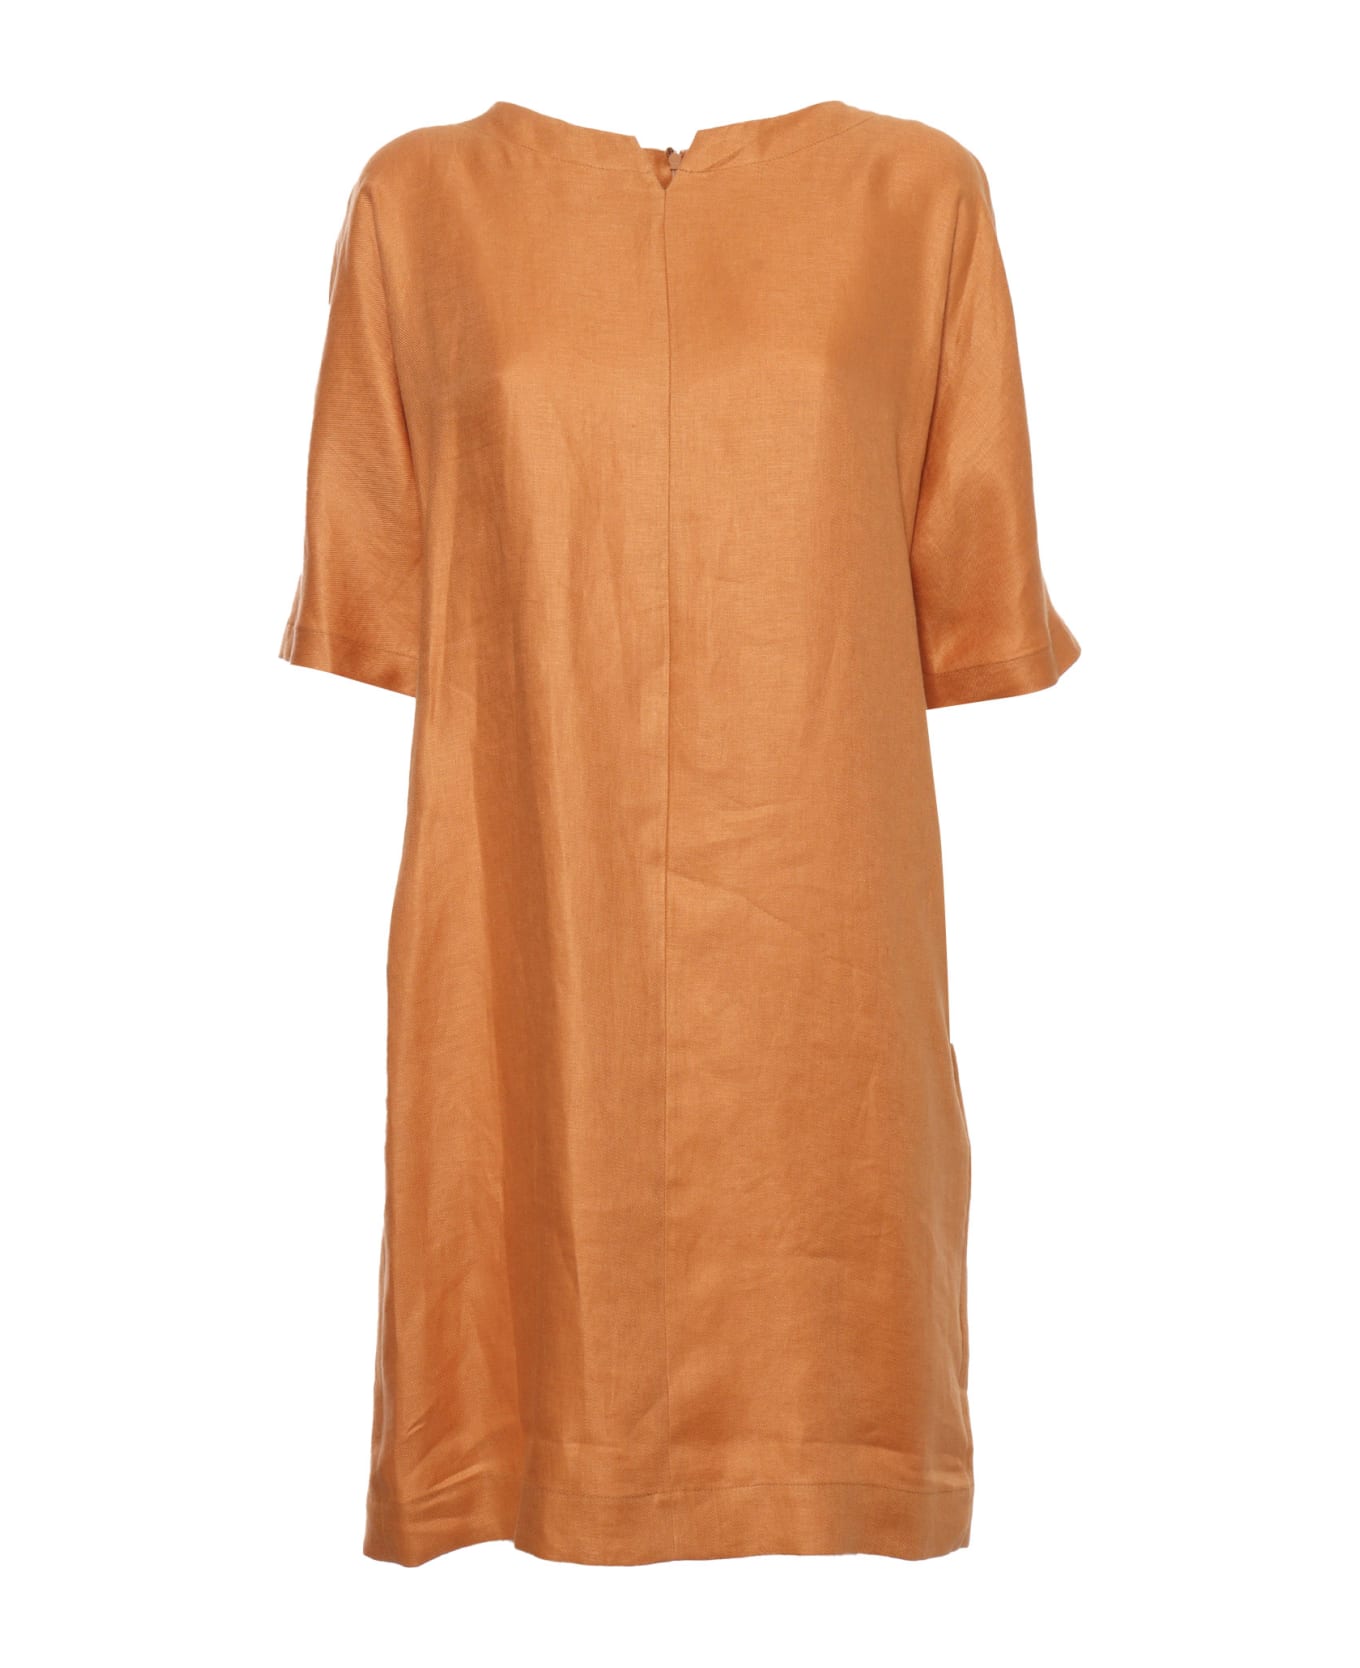 Antonelli Orange Linen Dress - ORANGE